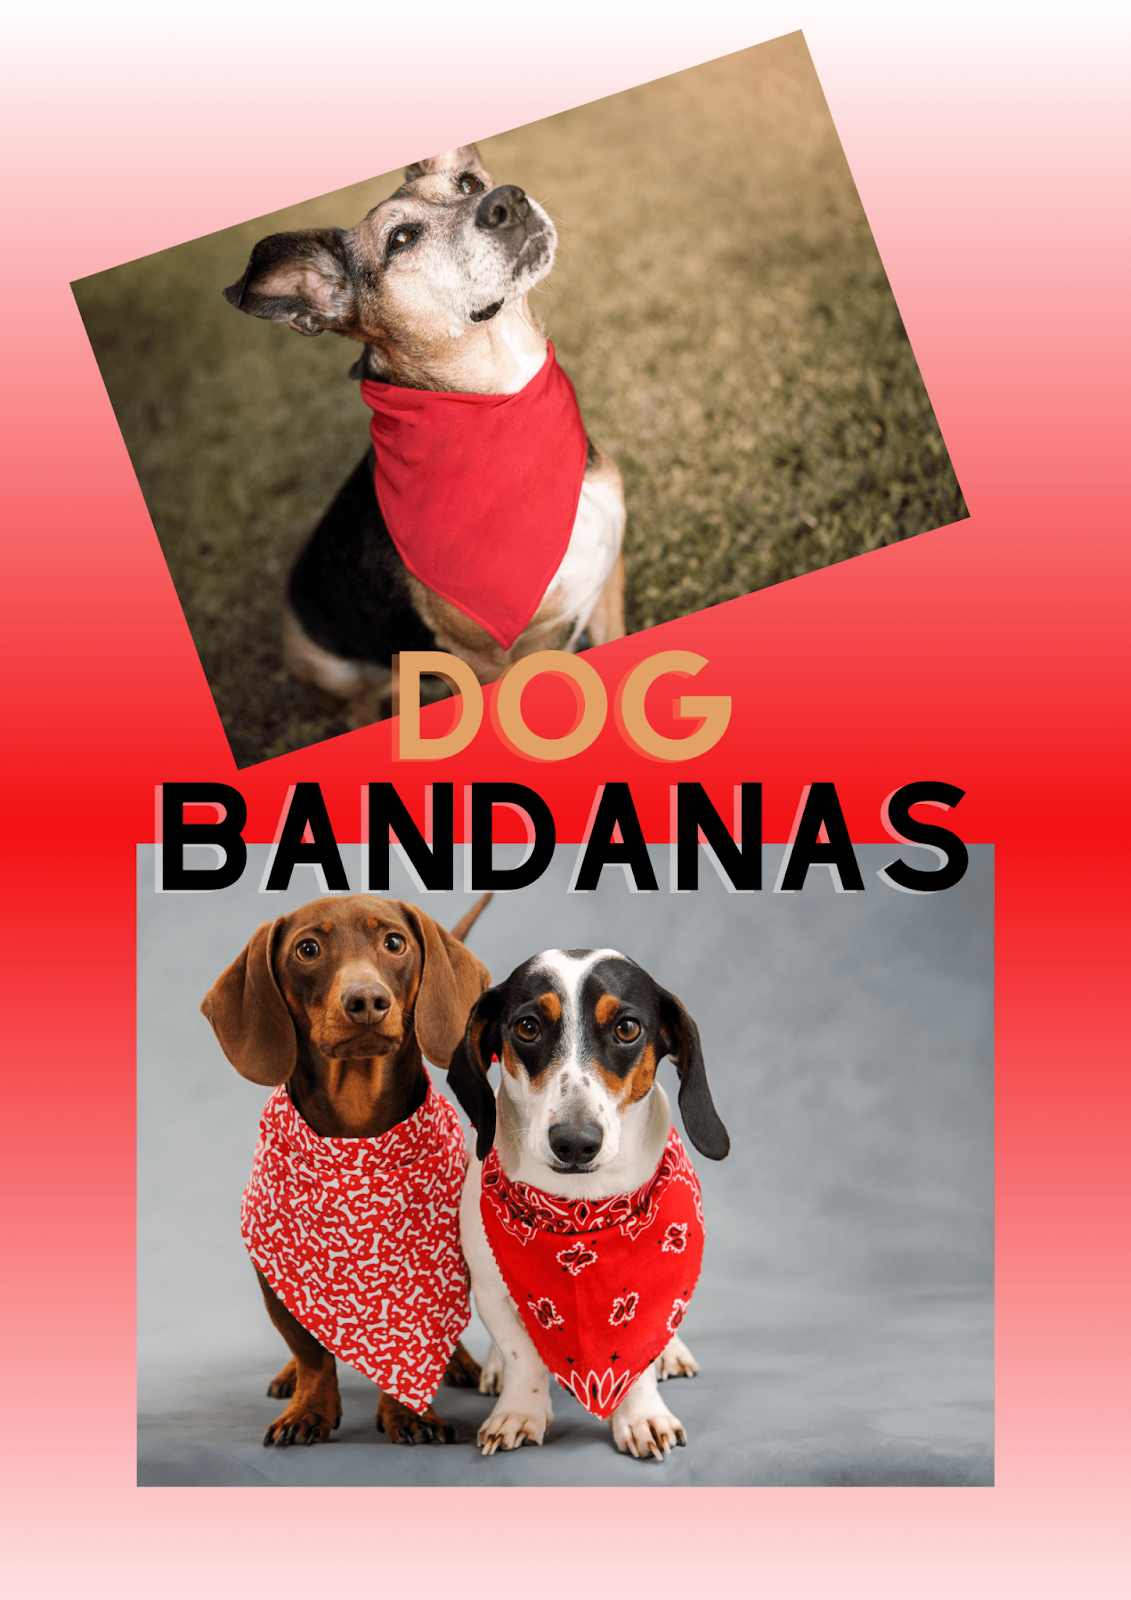 how to make dog bandanas